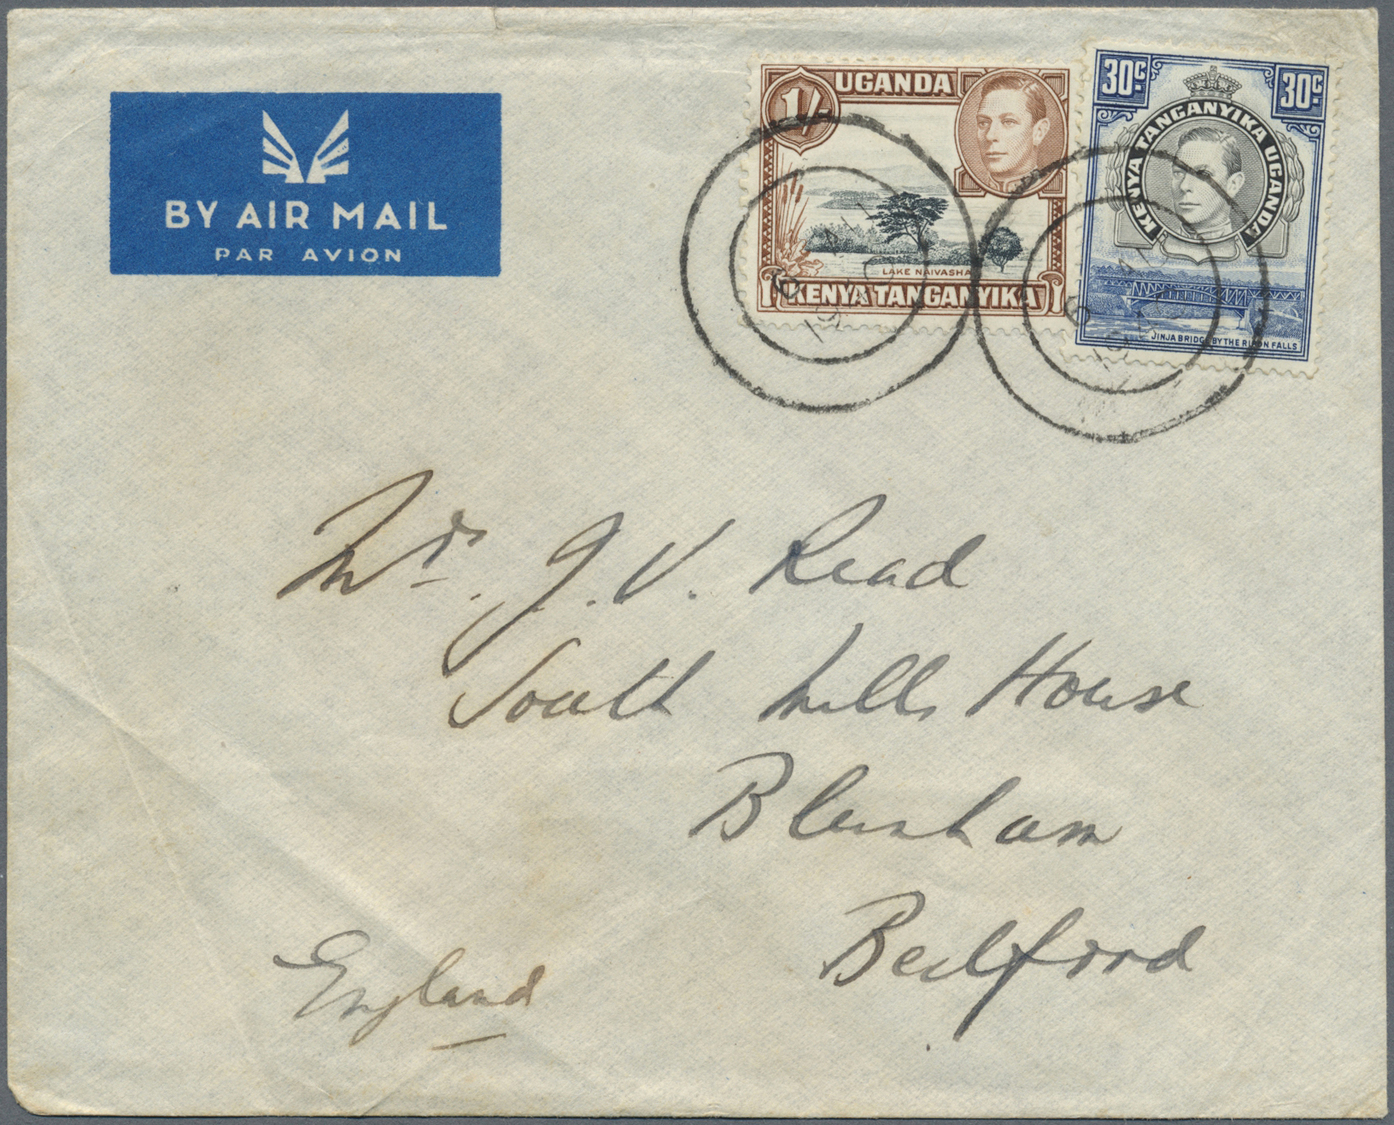 Br Kenia - Britisch Ostafrika: 1940. Air Mail Envelope Addressed To England Bearing Kenya Uganda SG 141, 30c Blue And Gr - British East Africa